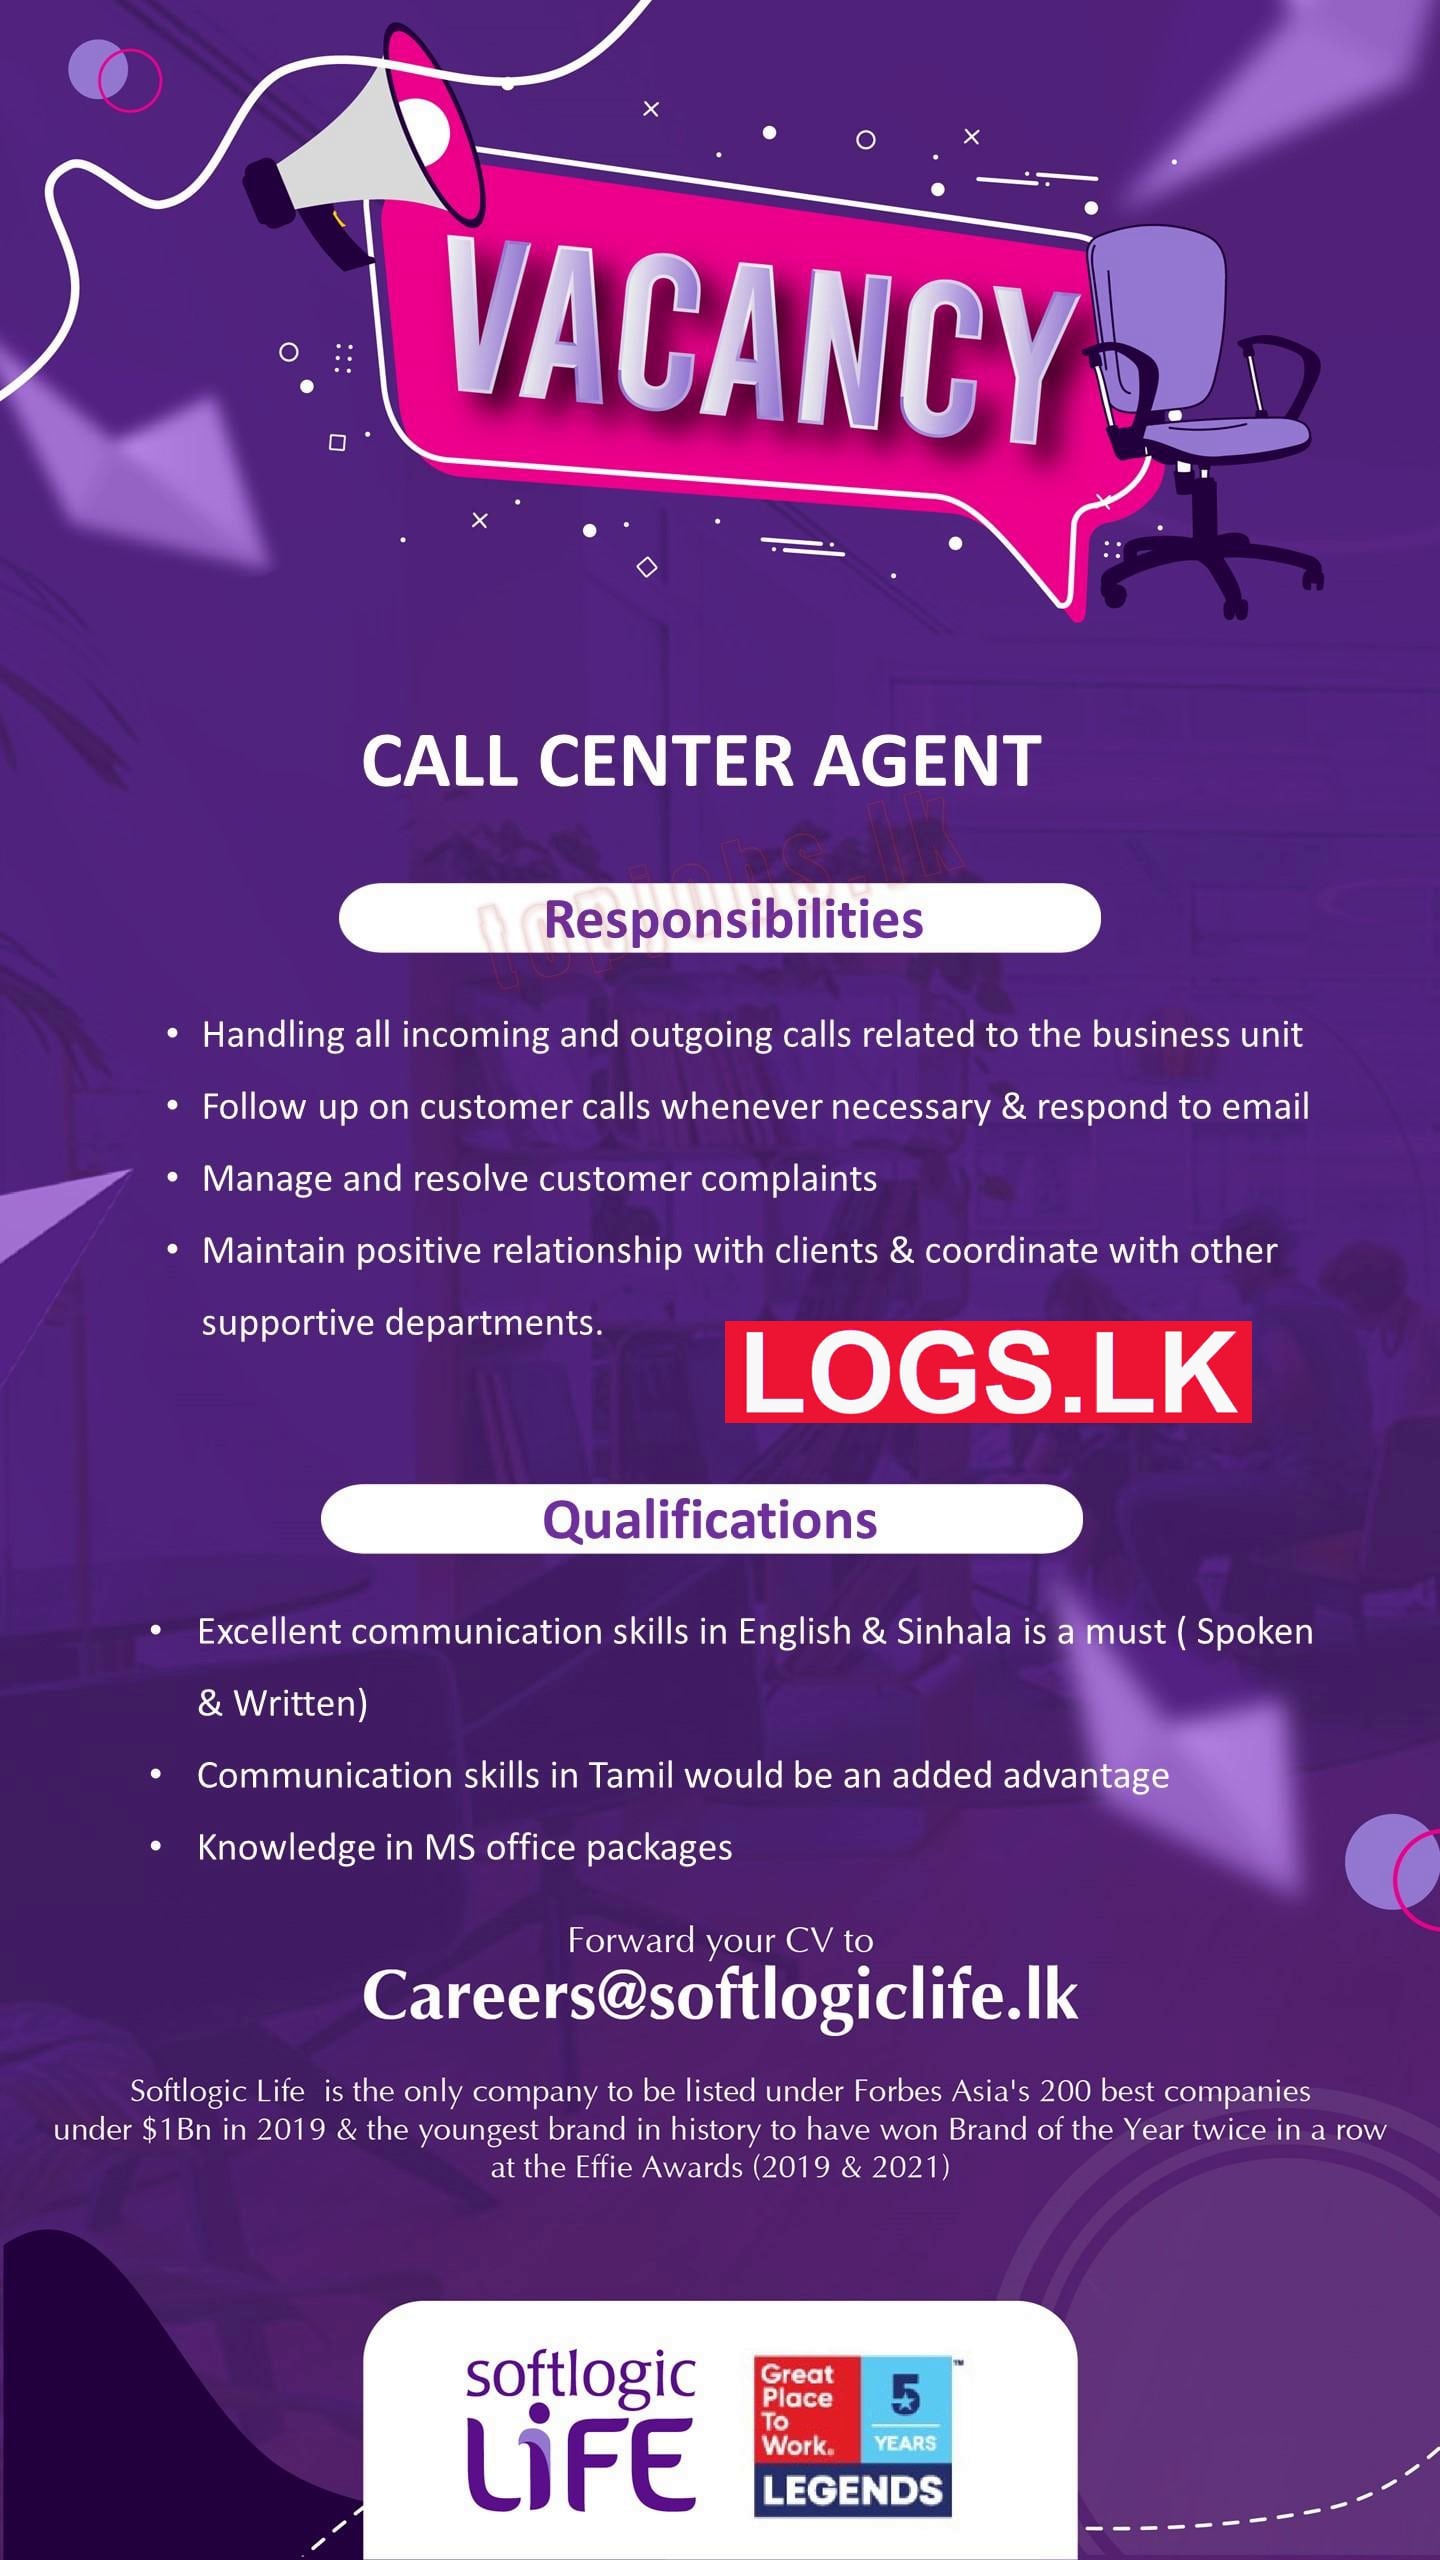 Call Center Agent Vacancies 2023 in Softlogic Life Insurance Job Vacancy 2023 in Sri Lanka